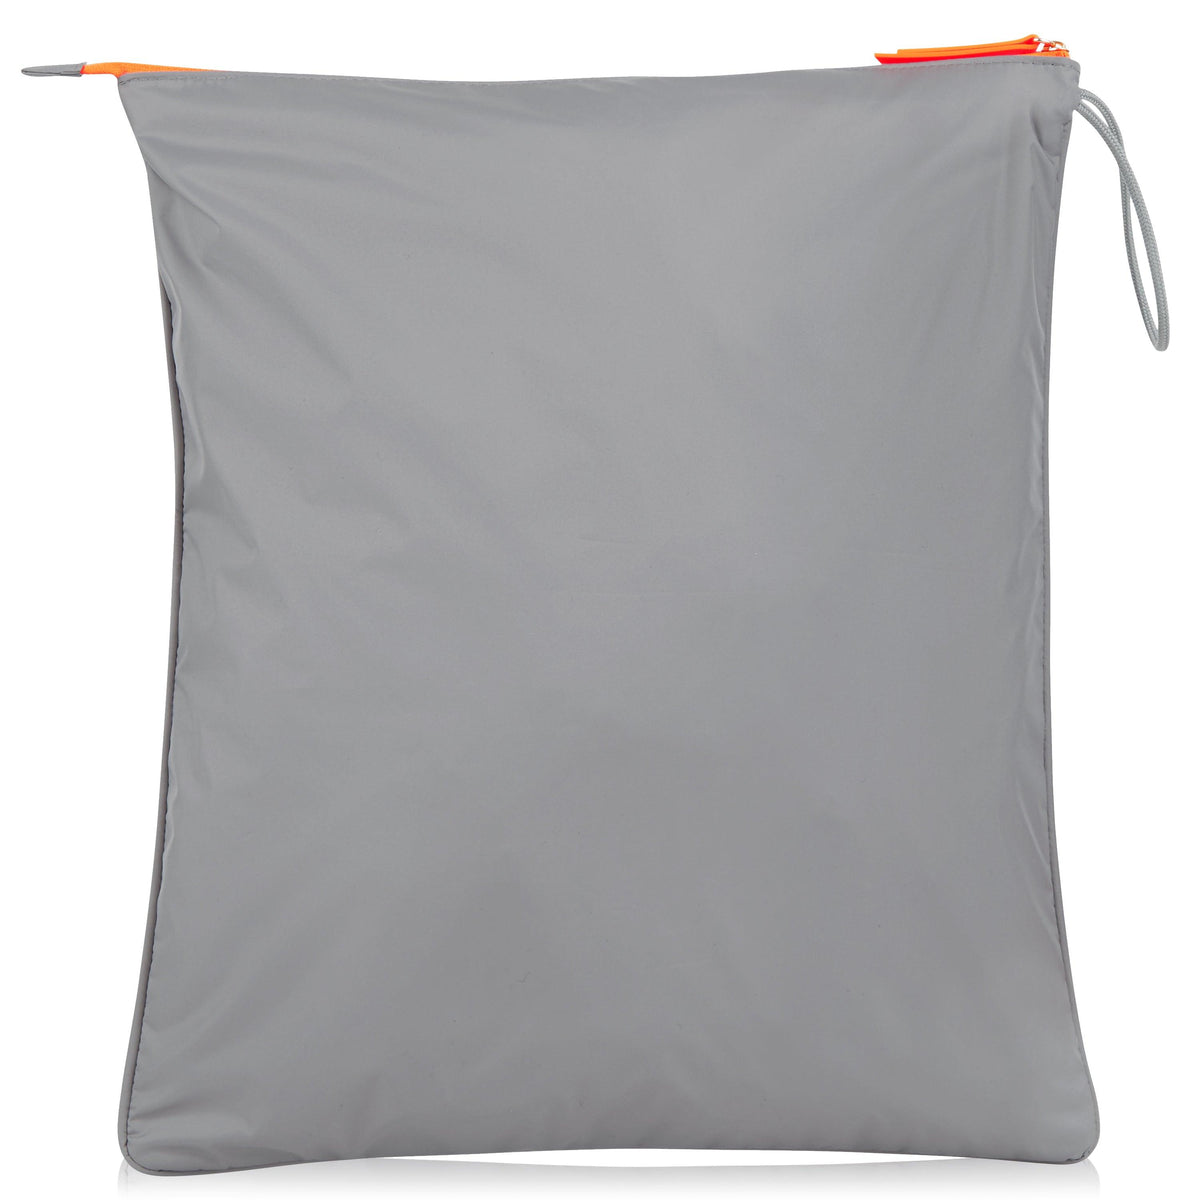 Rear view of Shadow Neon Orange Sweat Bag